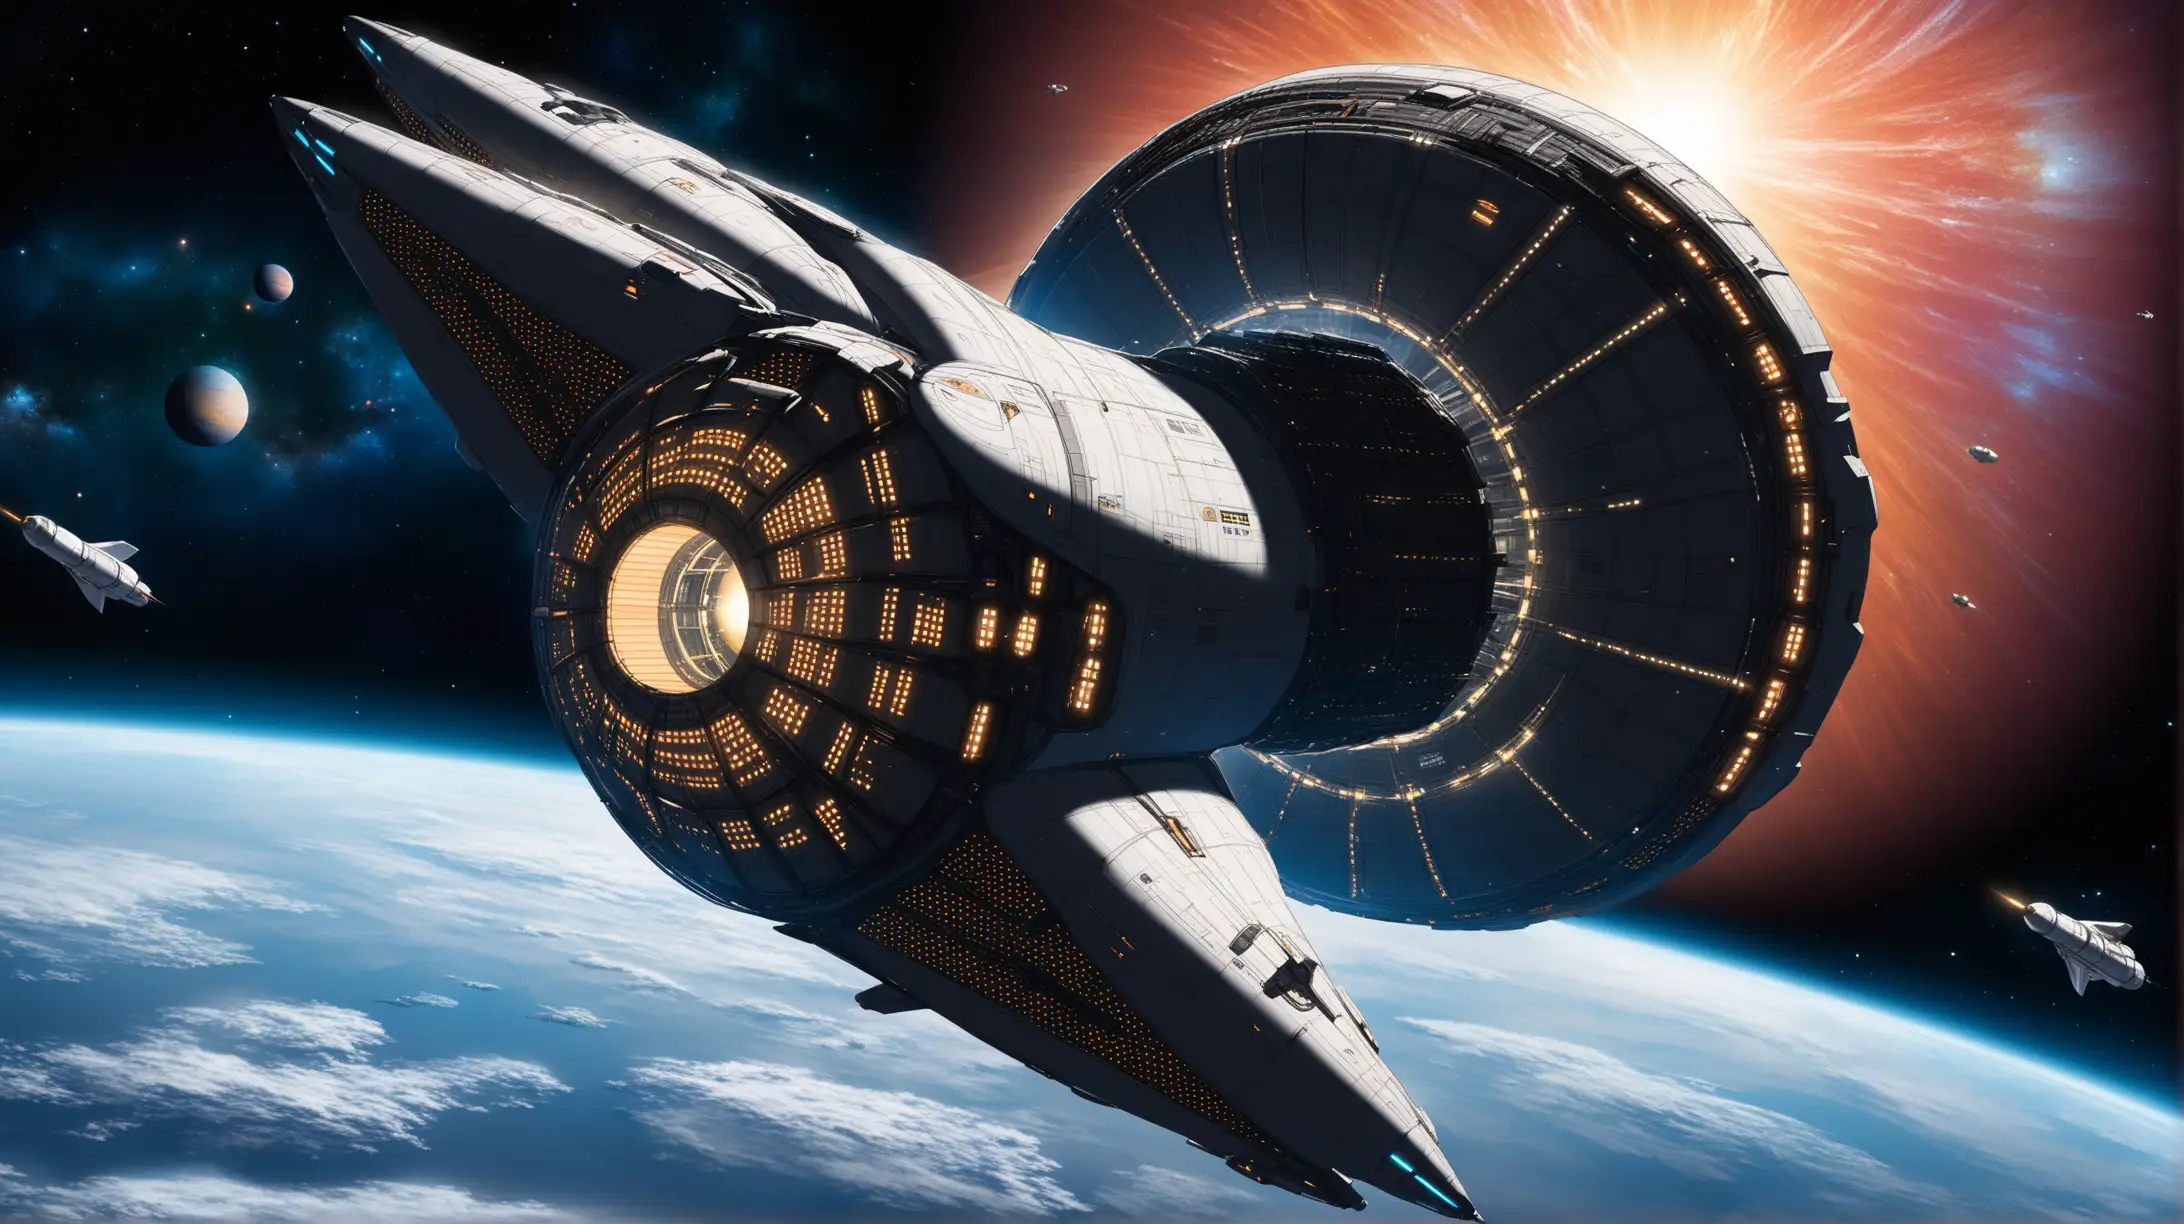 Biomorphic Interstellar Exploration Ship with Nebula Backdrop